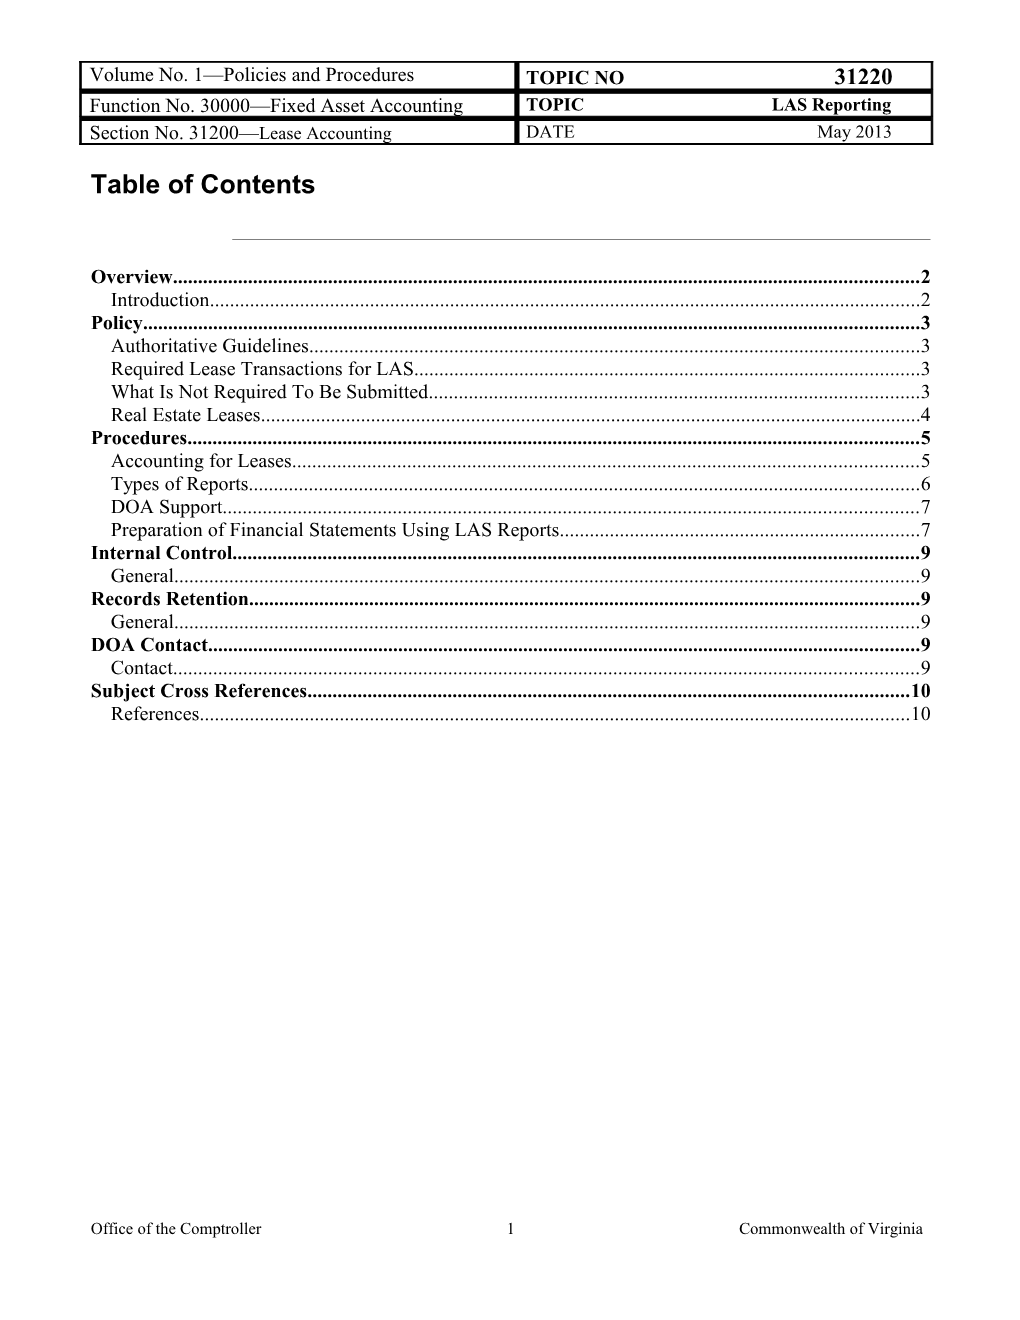 CAPP Manual - 31220 - Fixed Asset Accounting, LAS Reporting